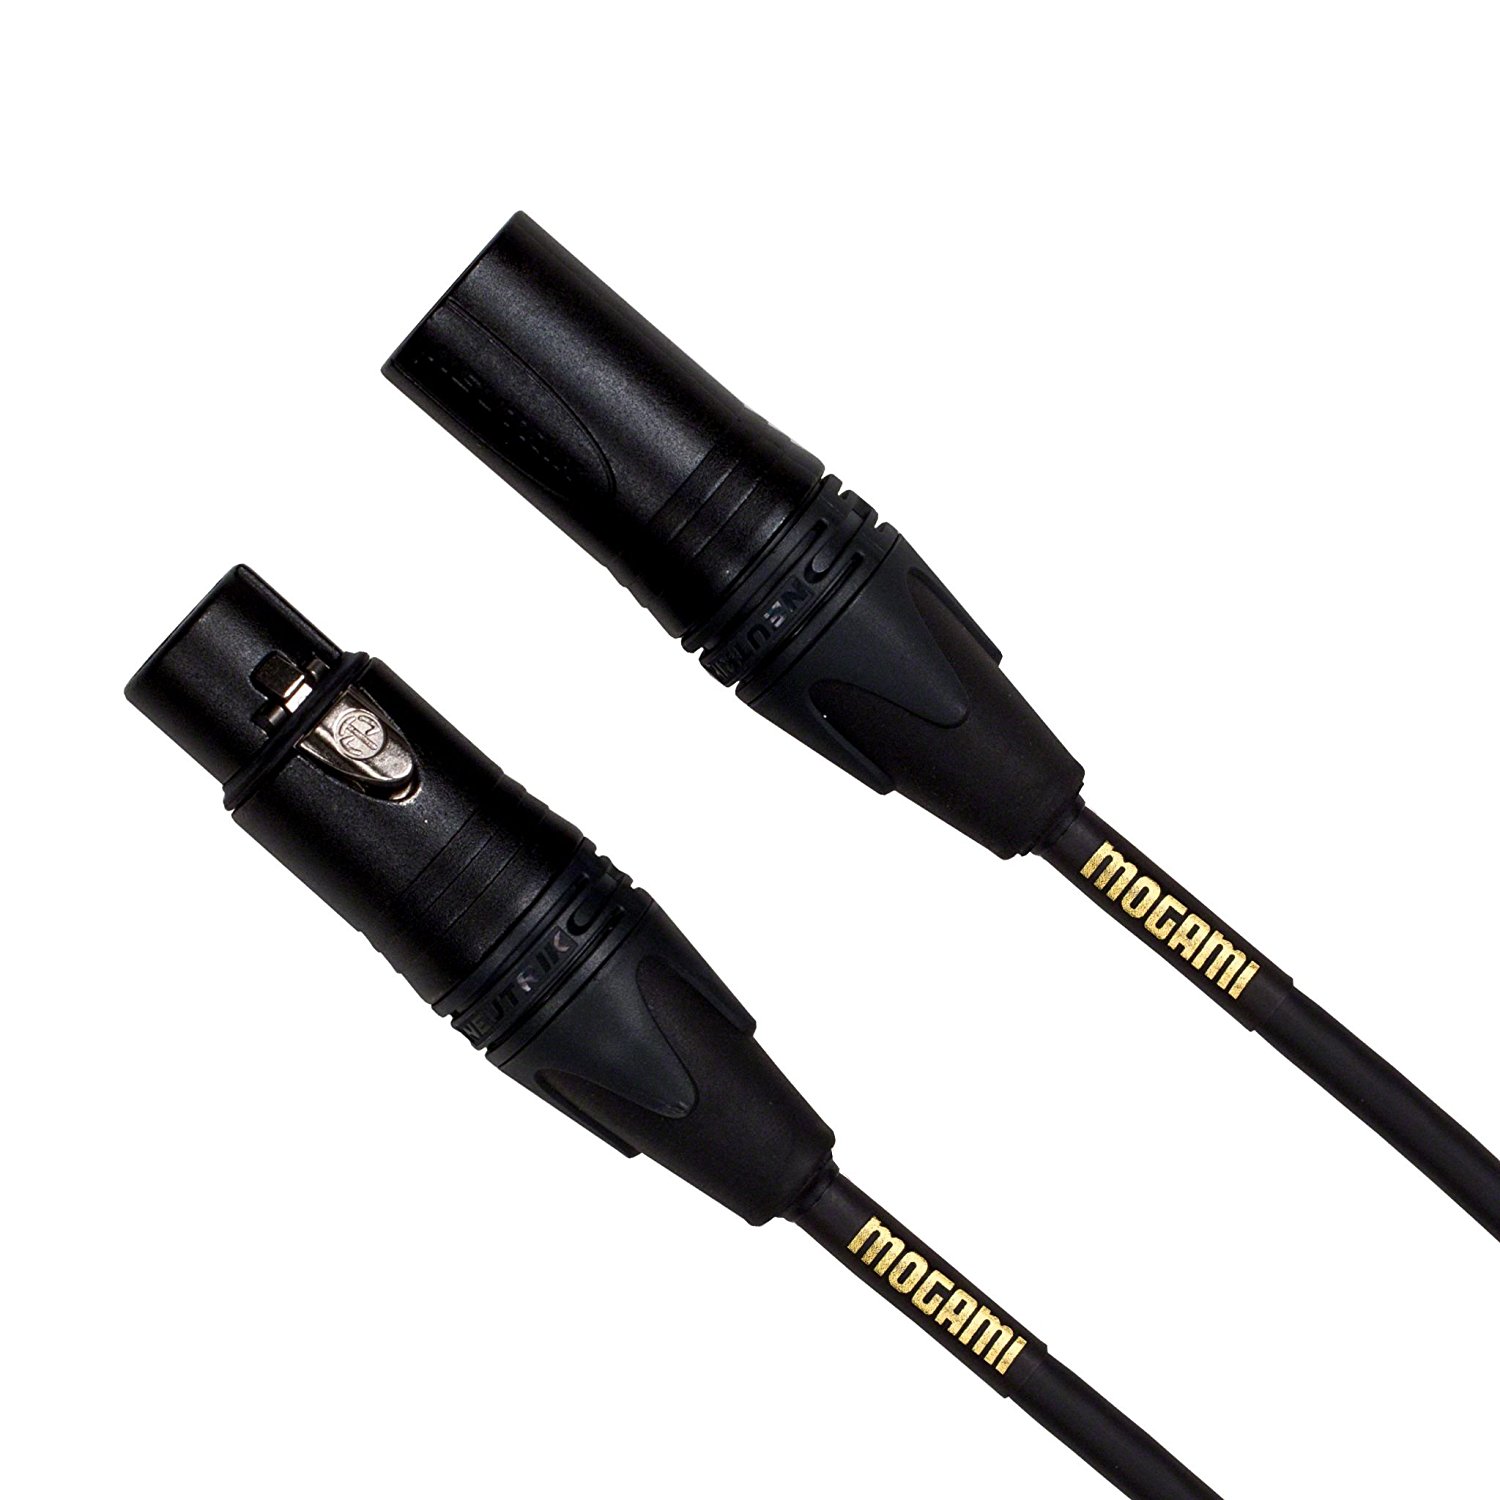 Mogami Gold Studio 15 Microphone Cable